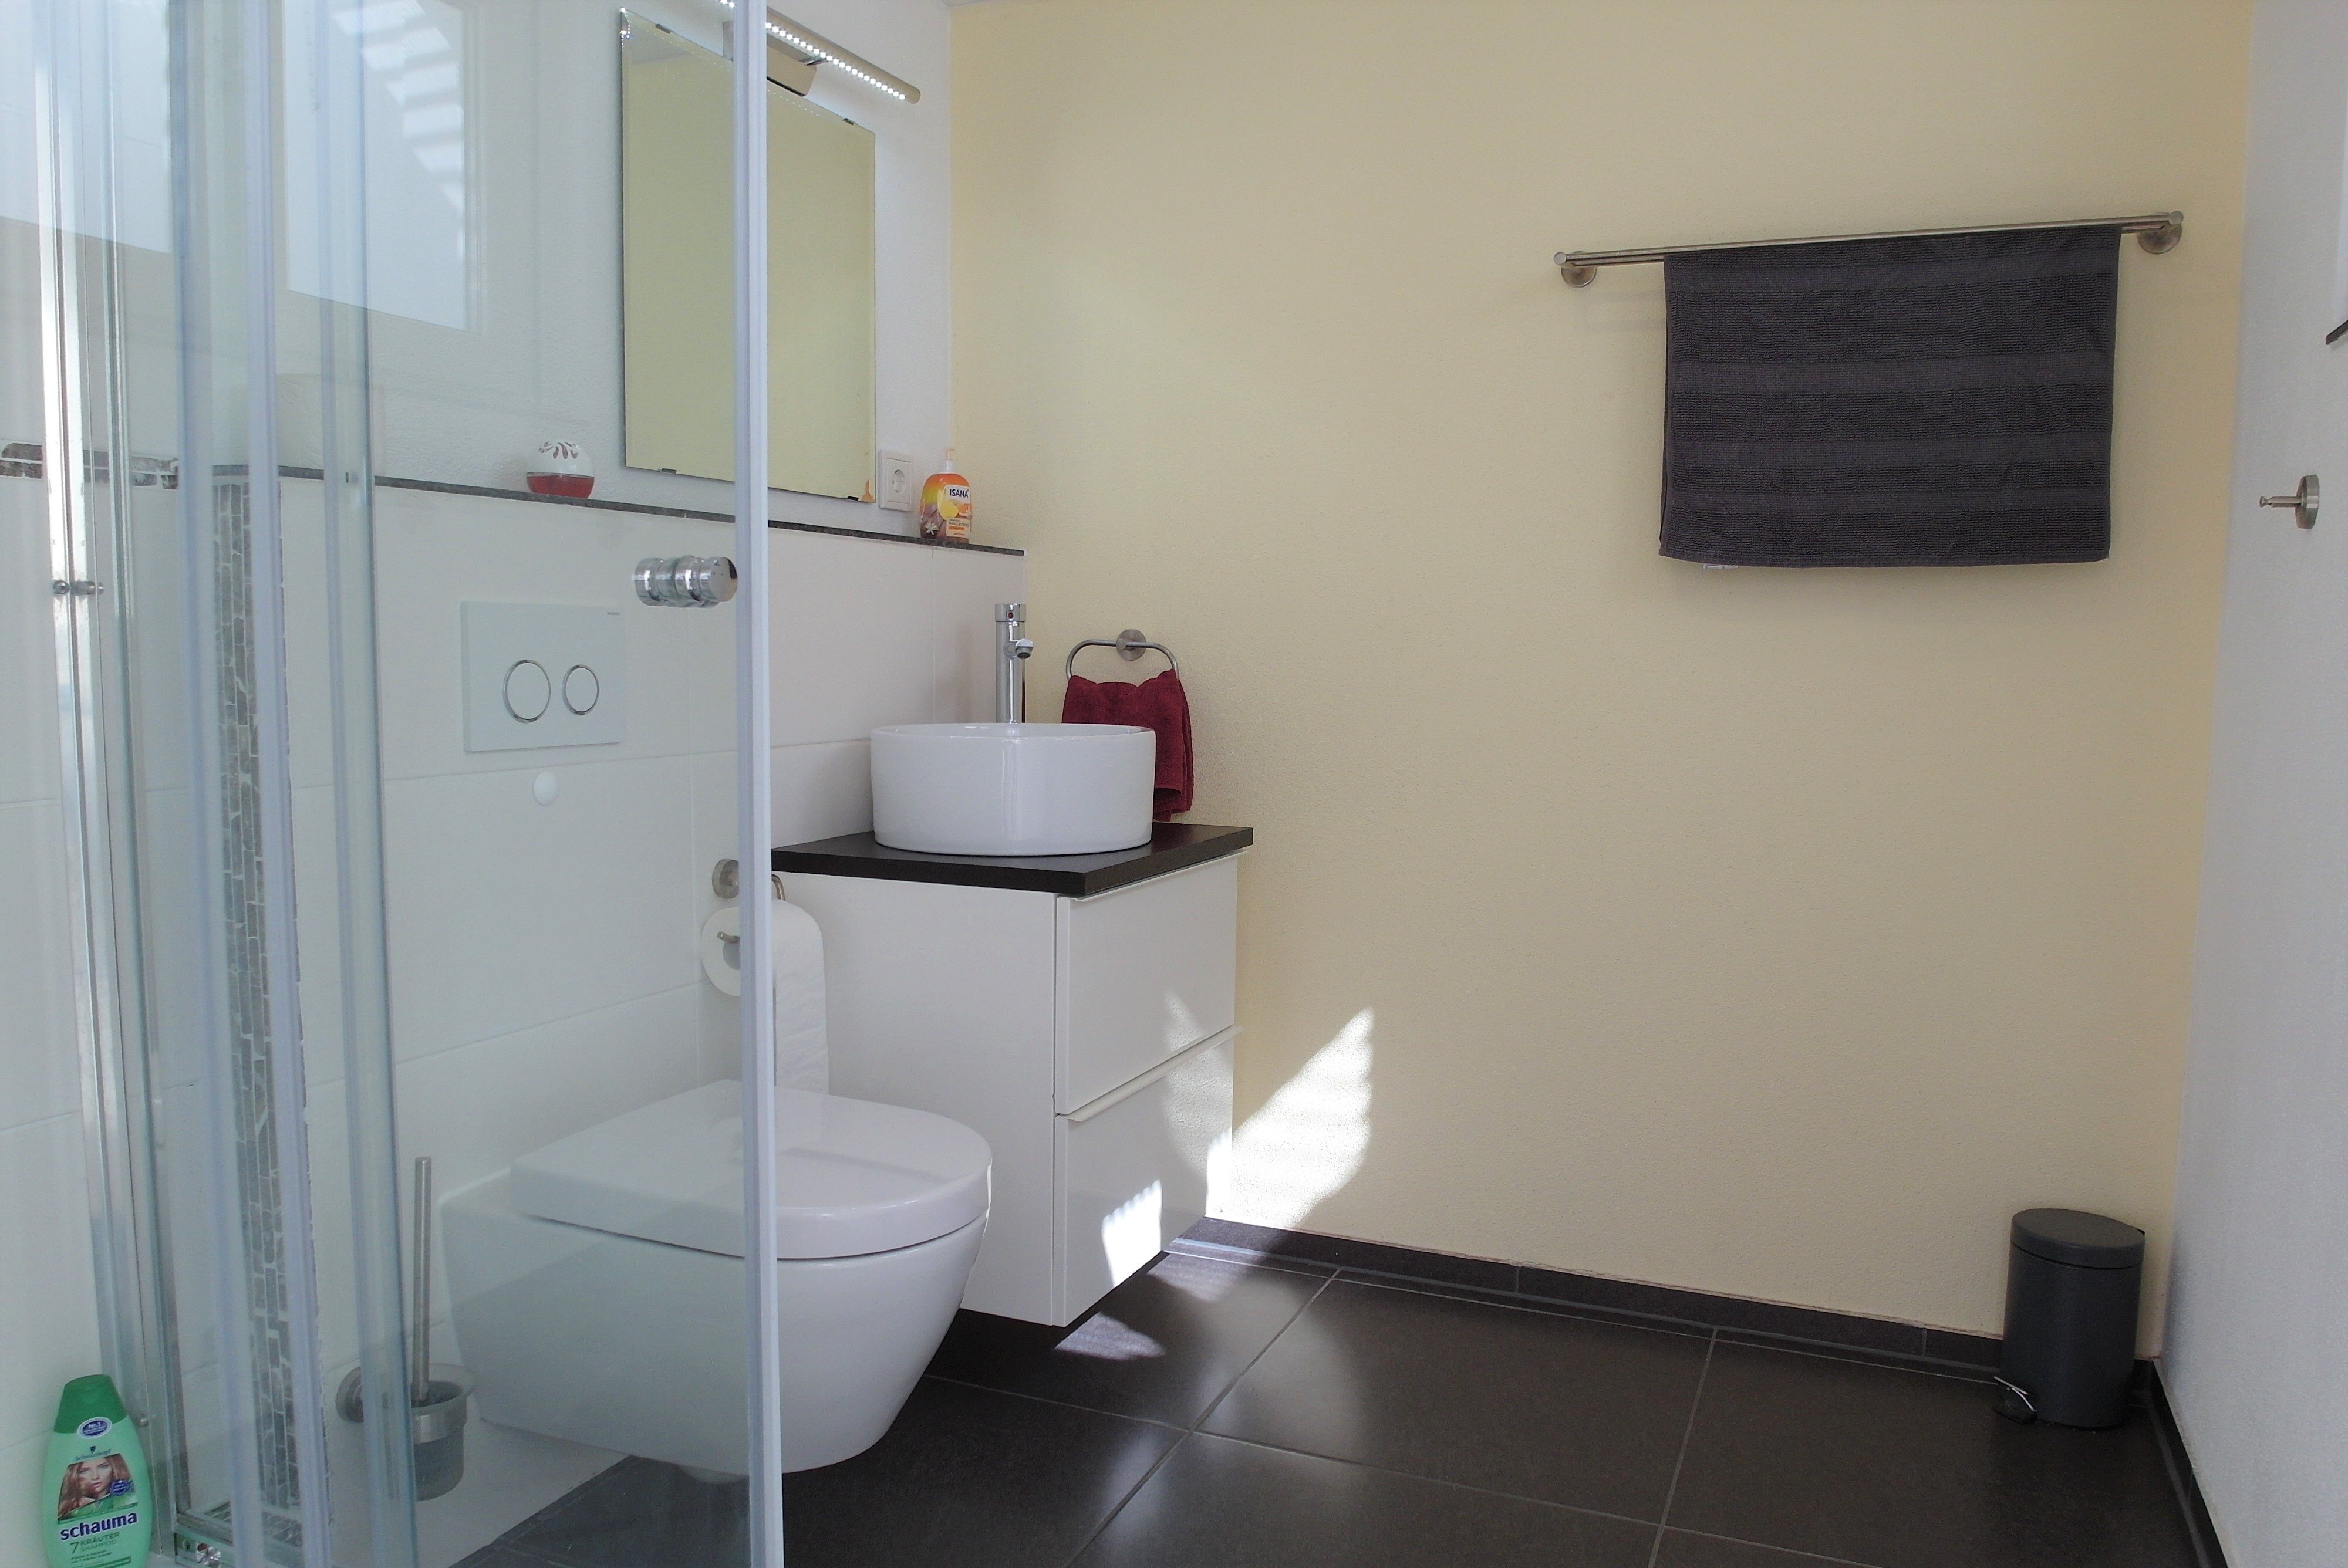 Apartment C - Bad Dusche & WC / Bathroom Shower & Toilet